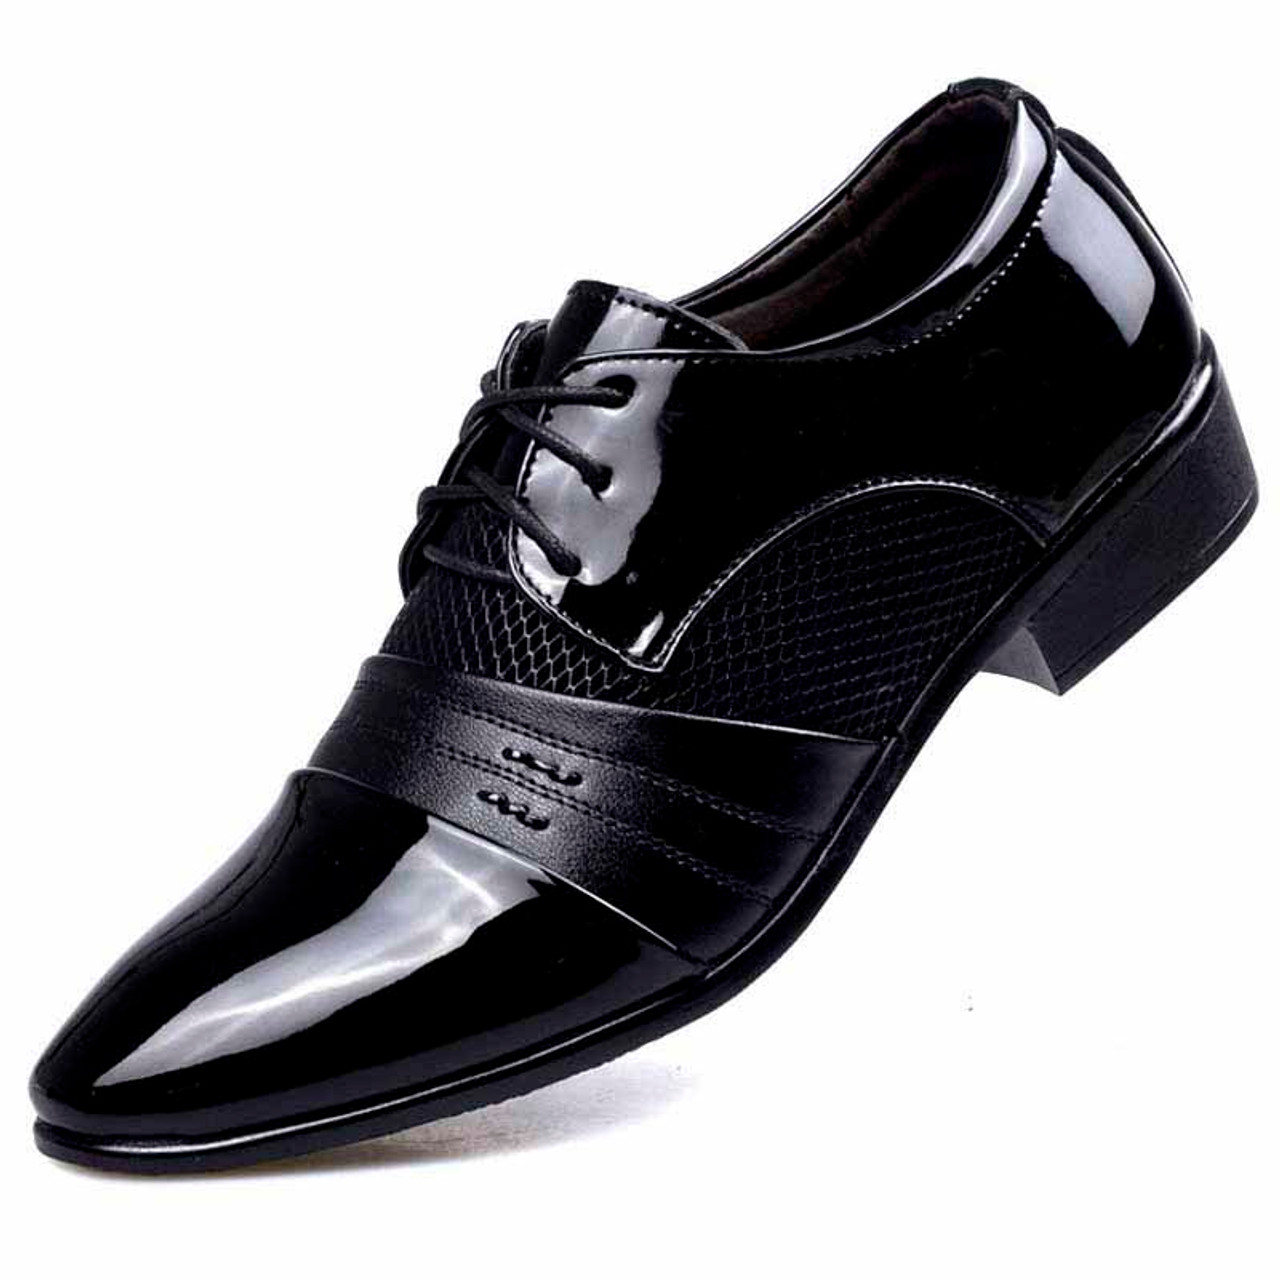 Black check pattern leather derby dress shoe | Mens dress shoes online ...